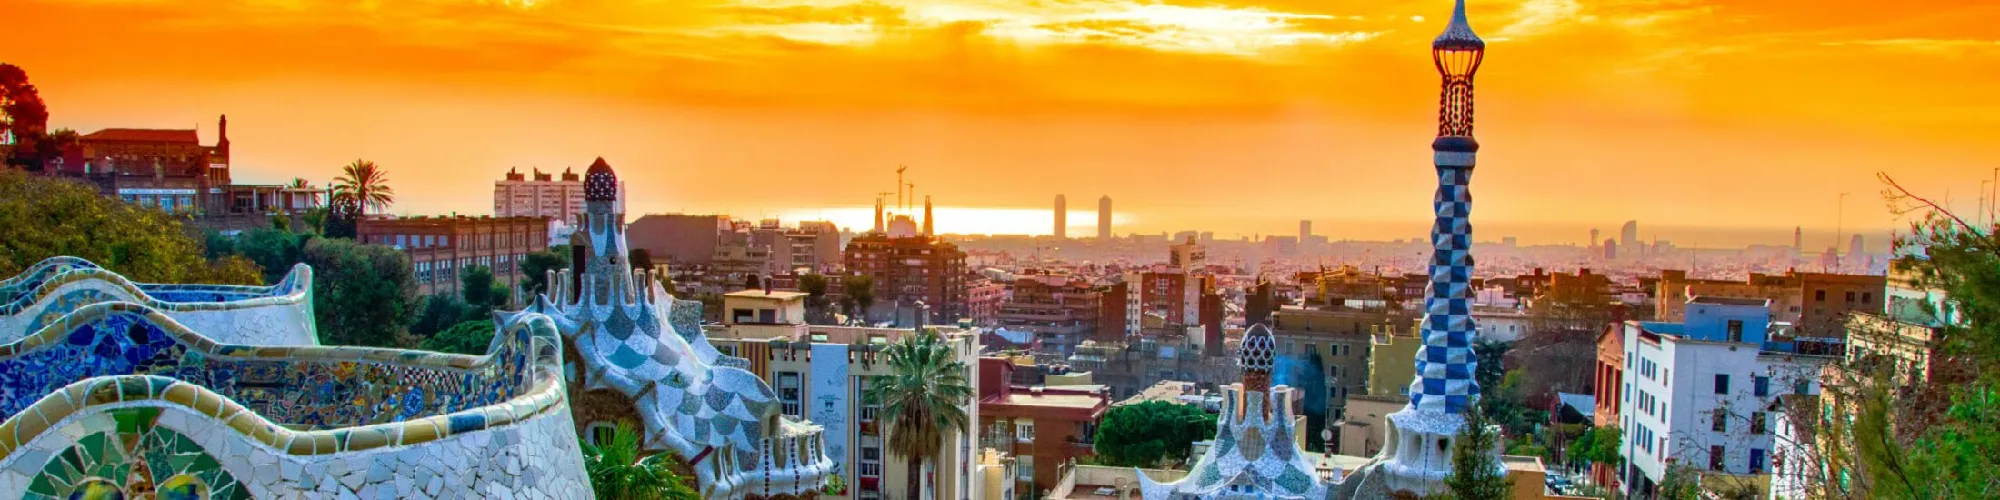 Städtereise Barcelona background image